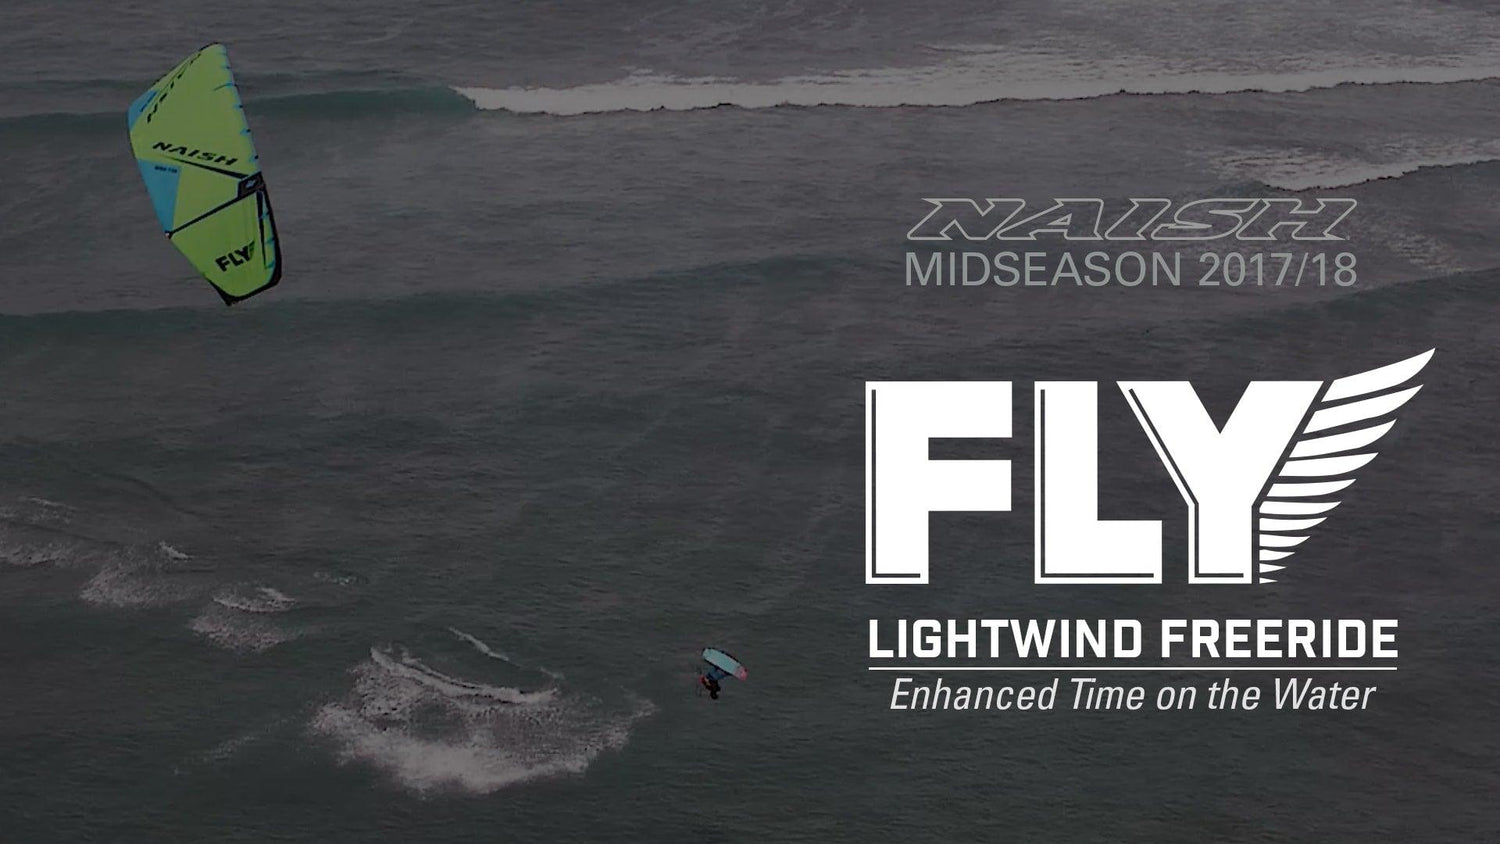 2017/18 Fly - Lightwind Freeride - Naish.com